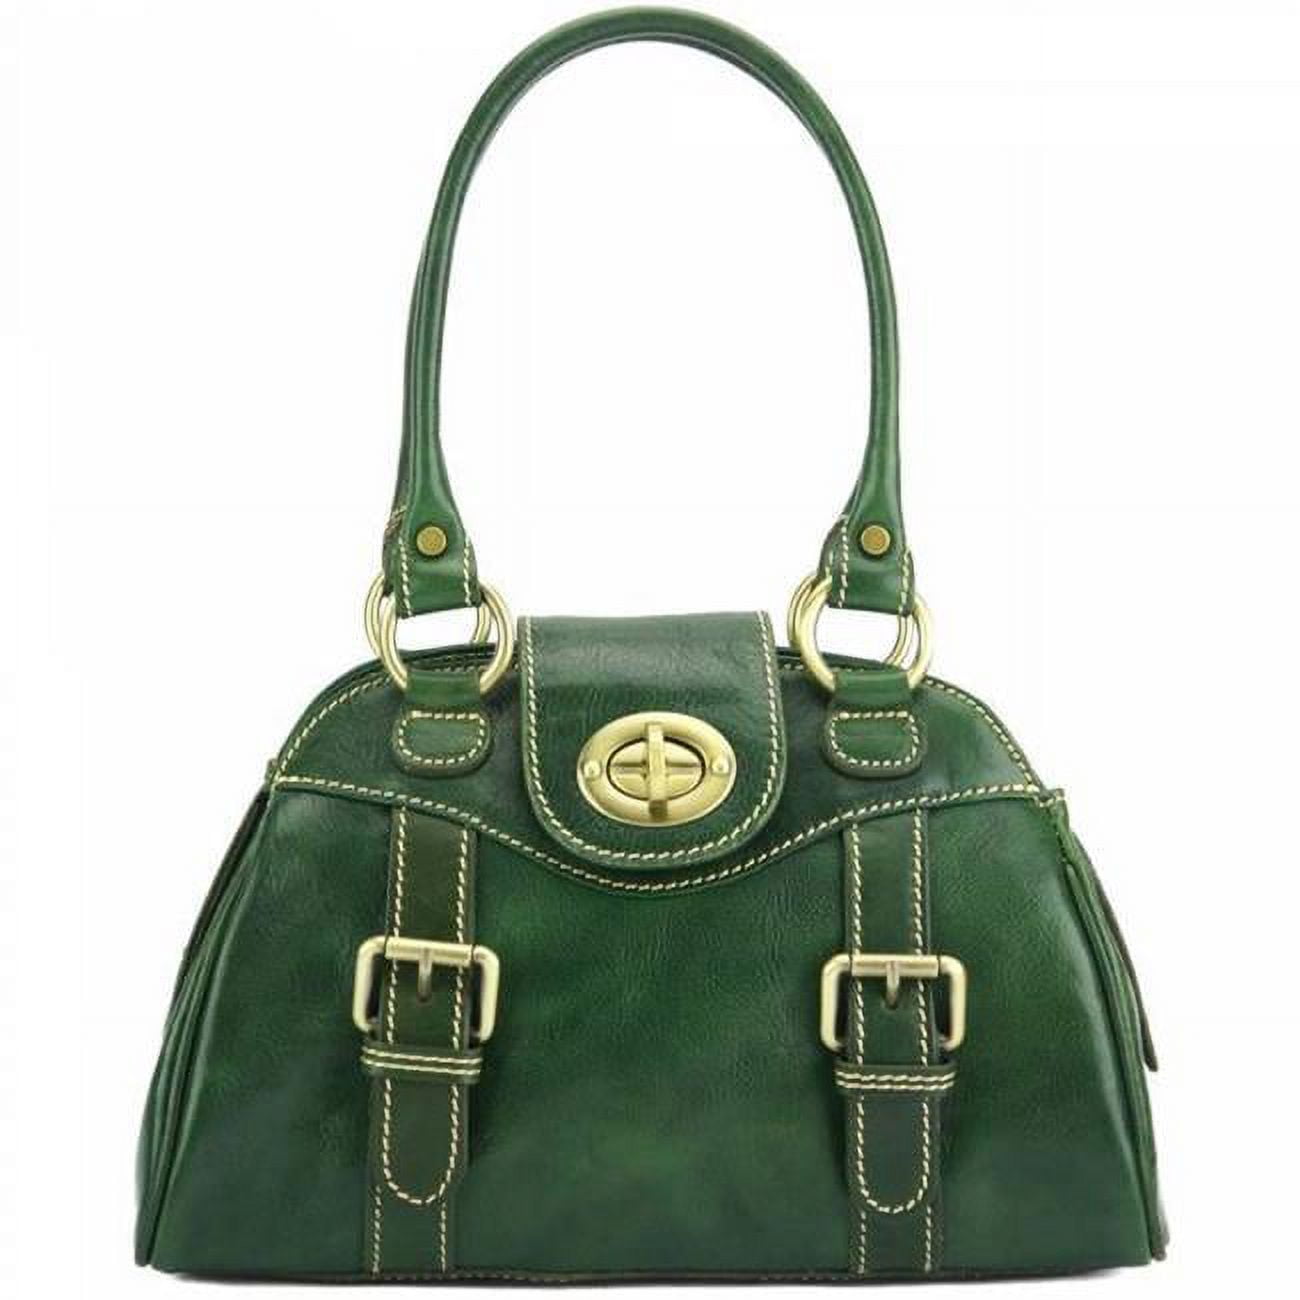 Luxury Italian Leather Handbags and Accessories